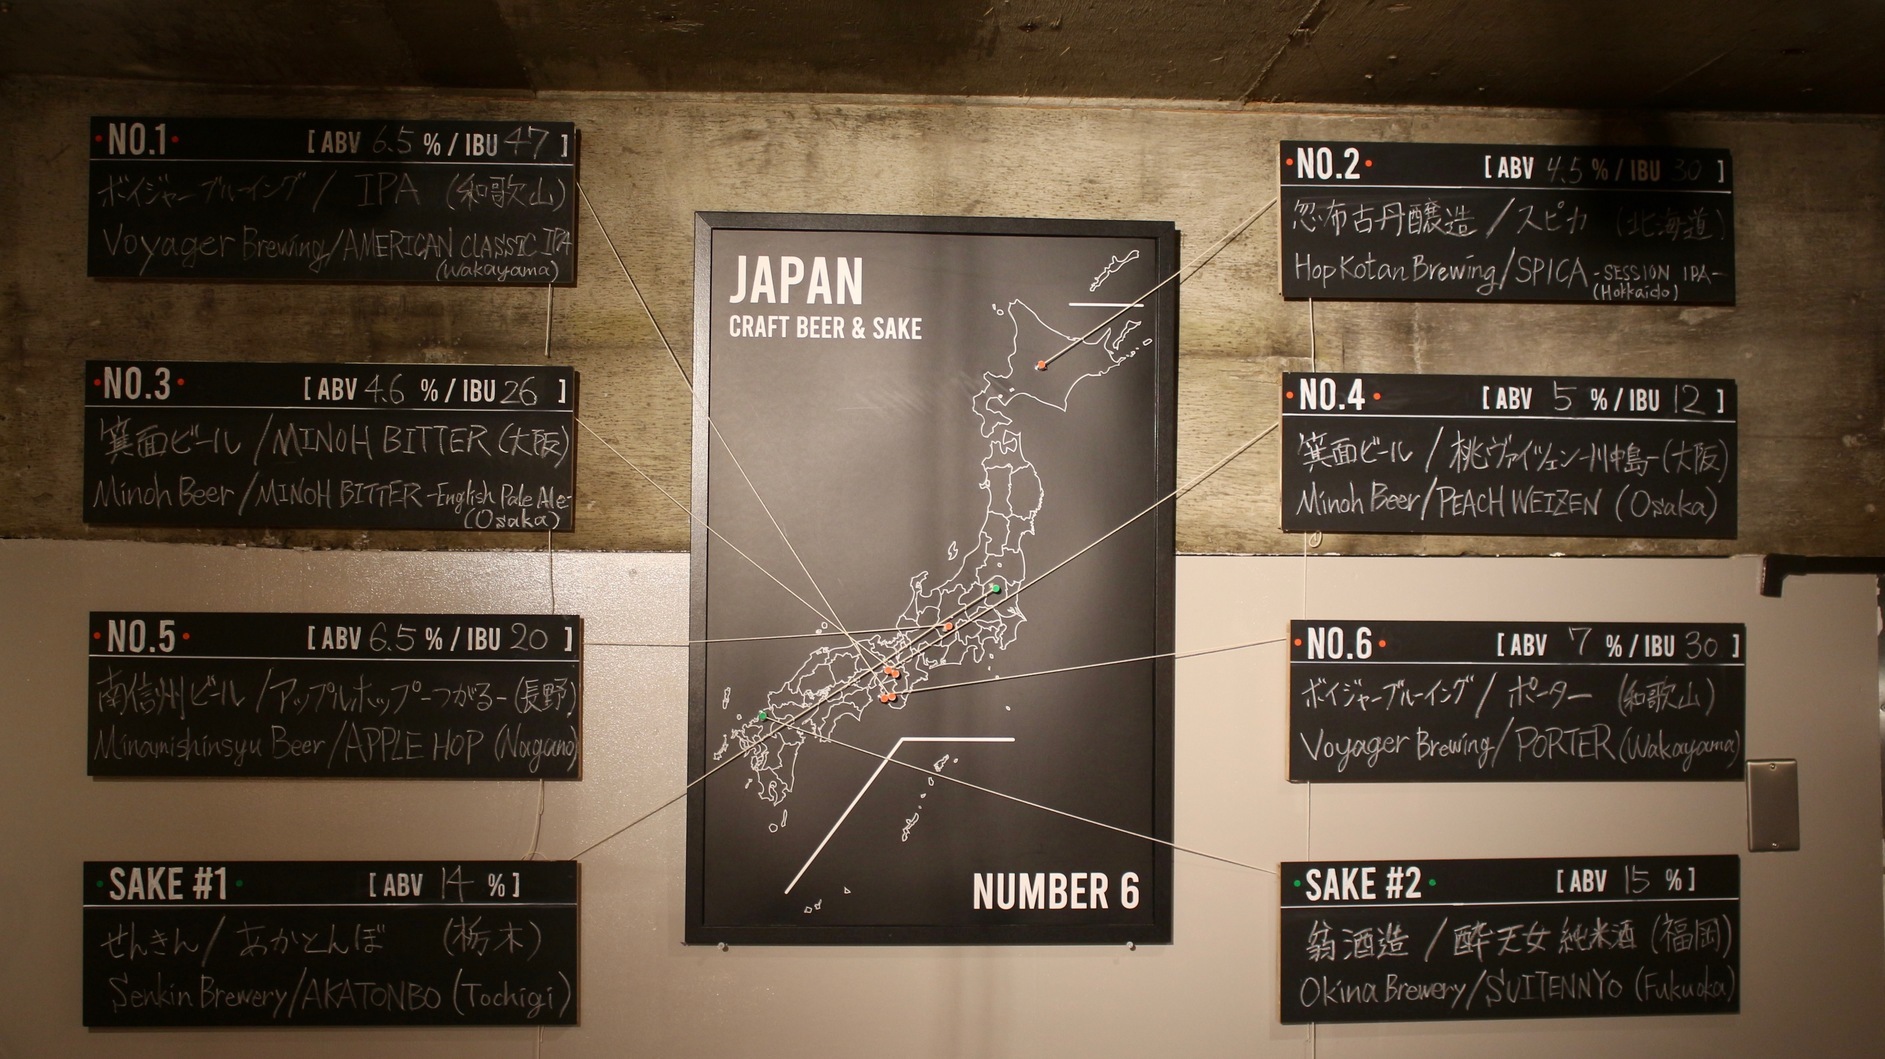 NUMBER 6 - Japanese Craft Beer Bar - Nymgyocho - Tokyo